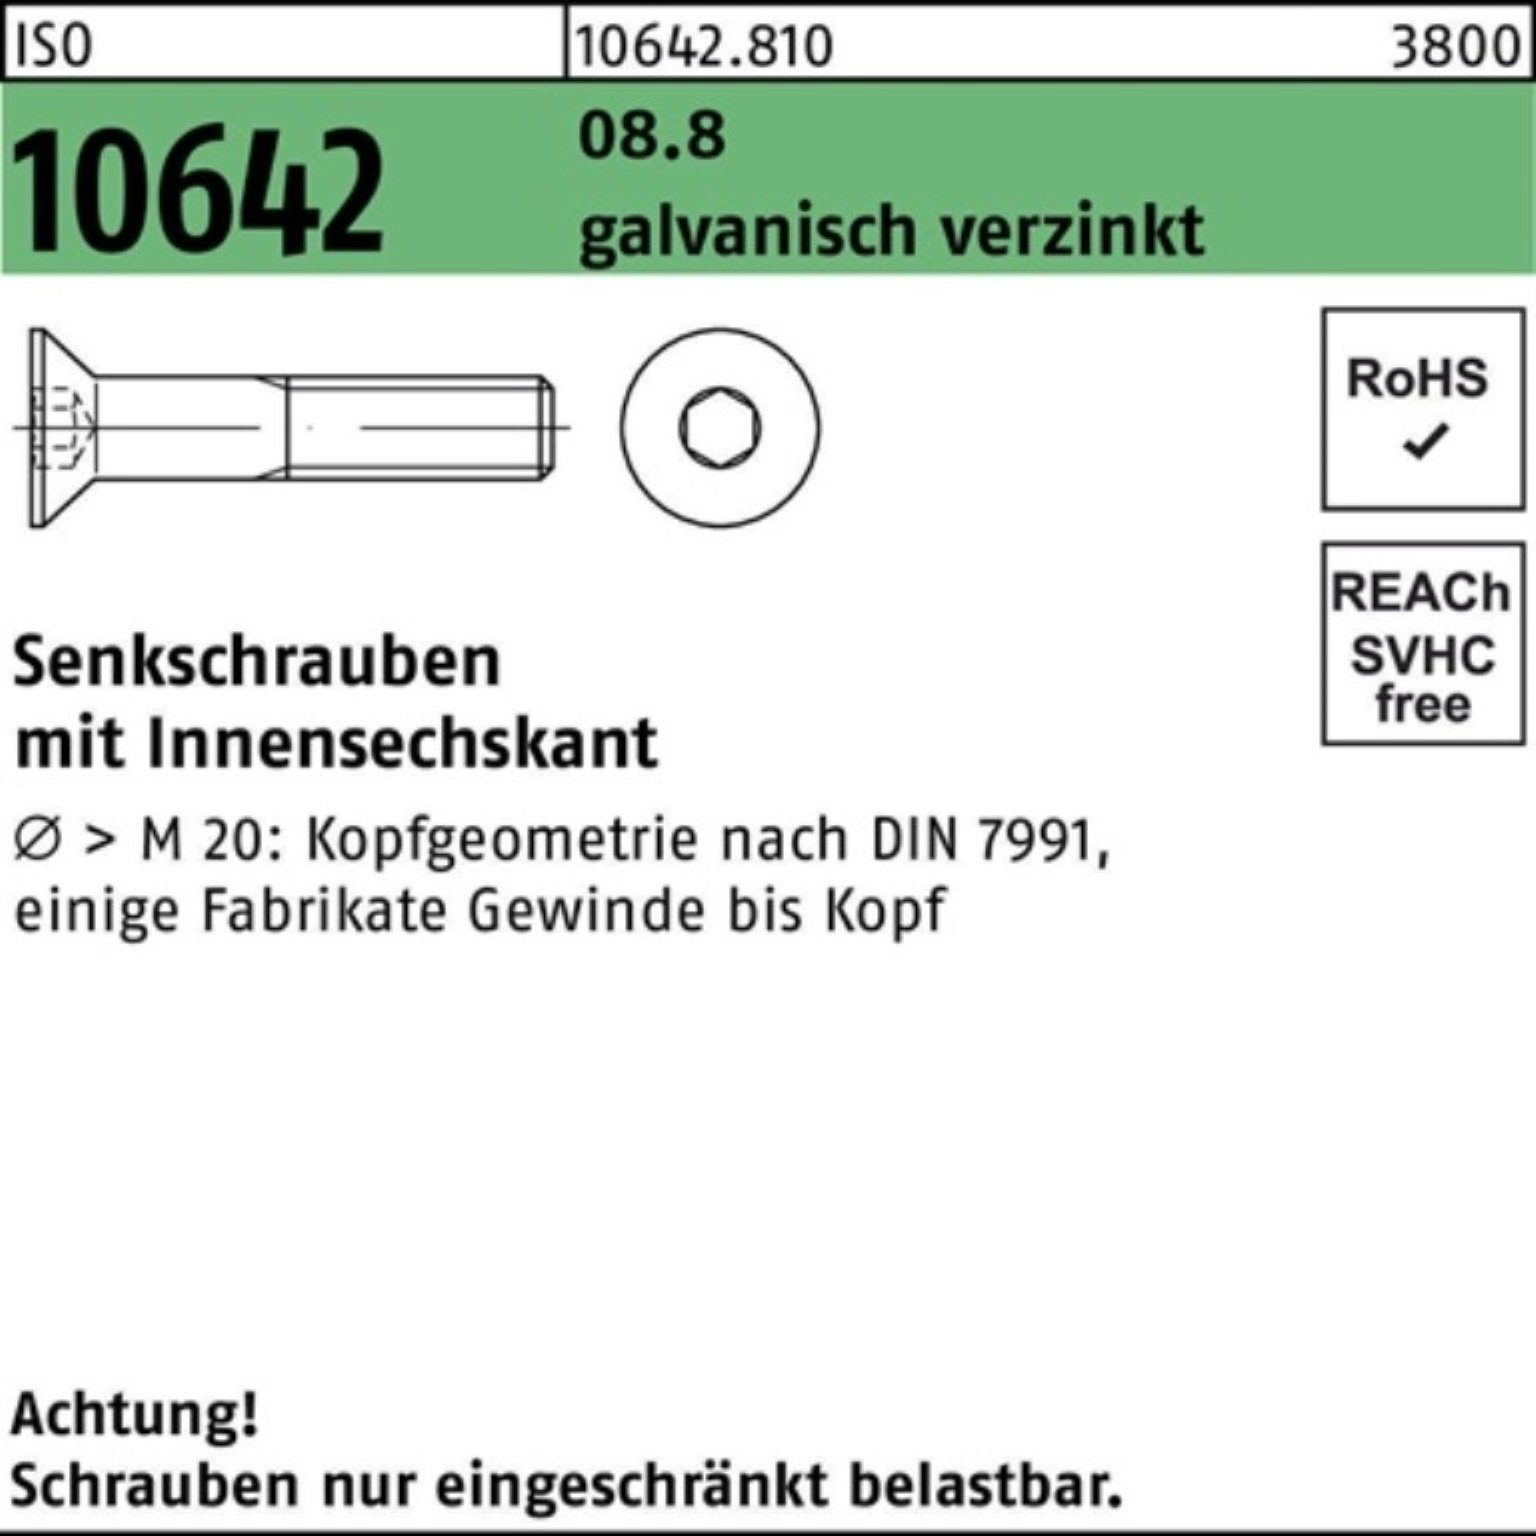 Innen-6kt Pack galv.verz. ISO 200 40 Senkschraube 8.8 200er 10642 Reyher Senkschraube M8x